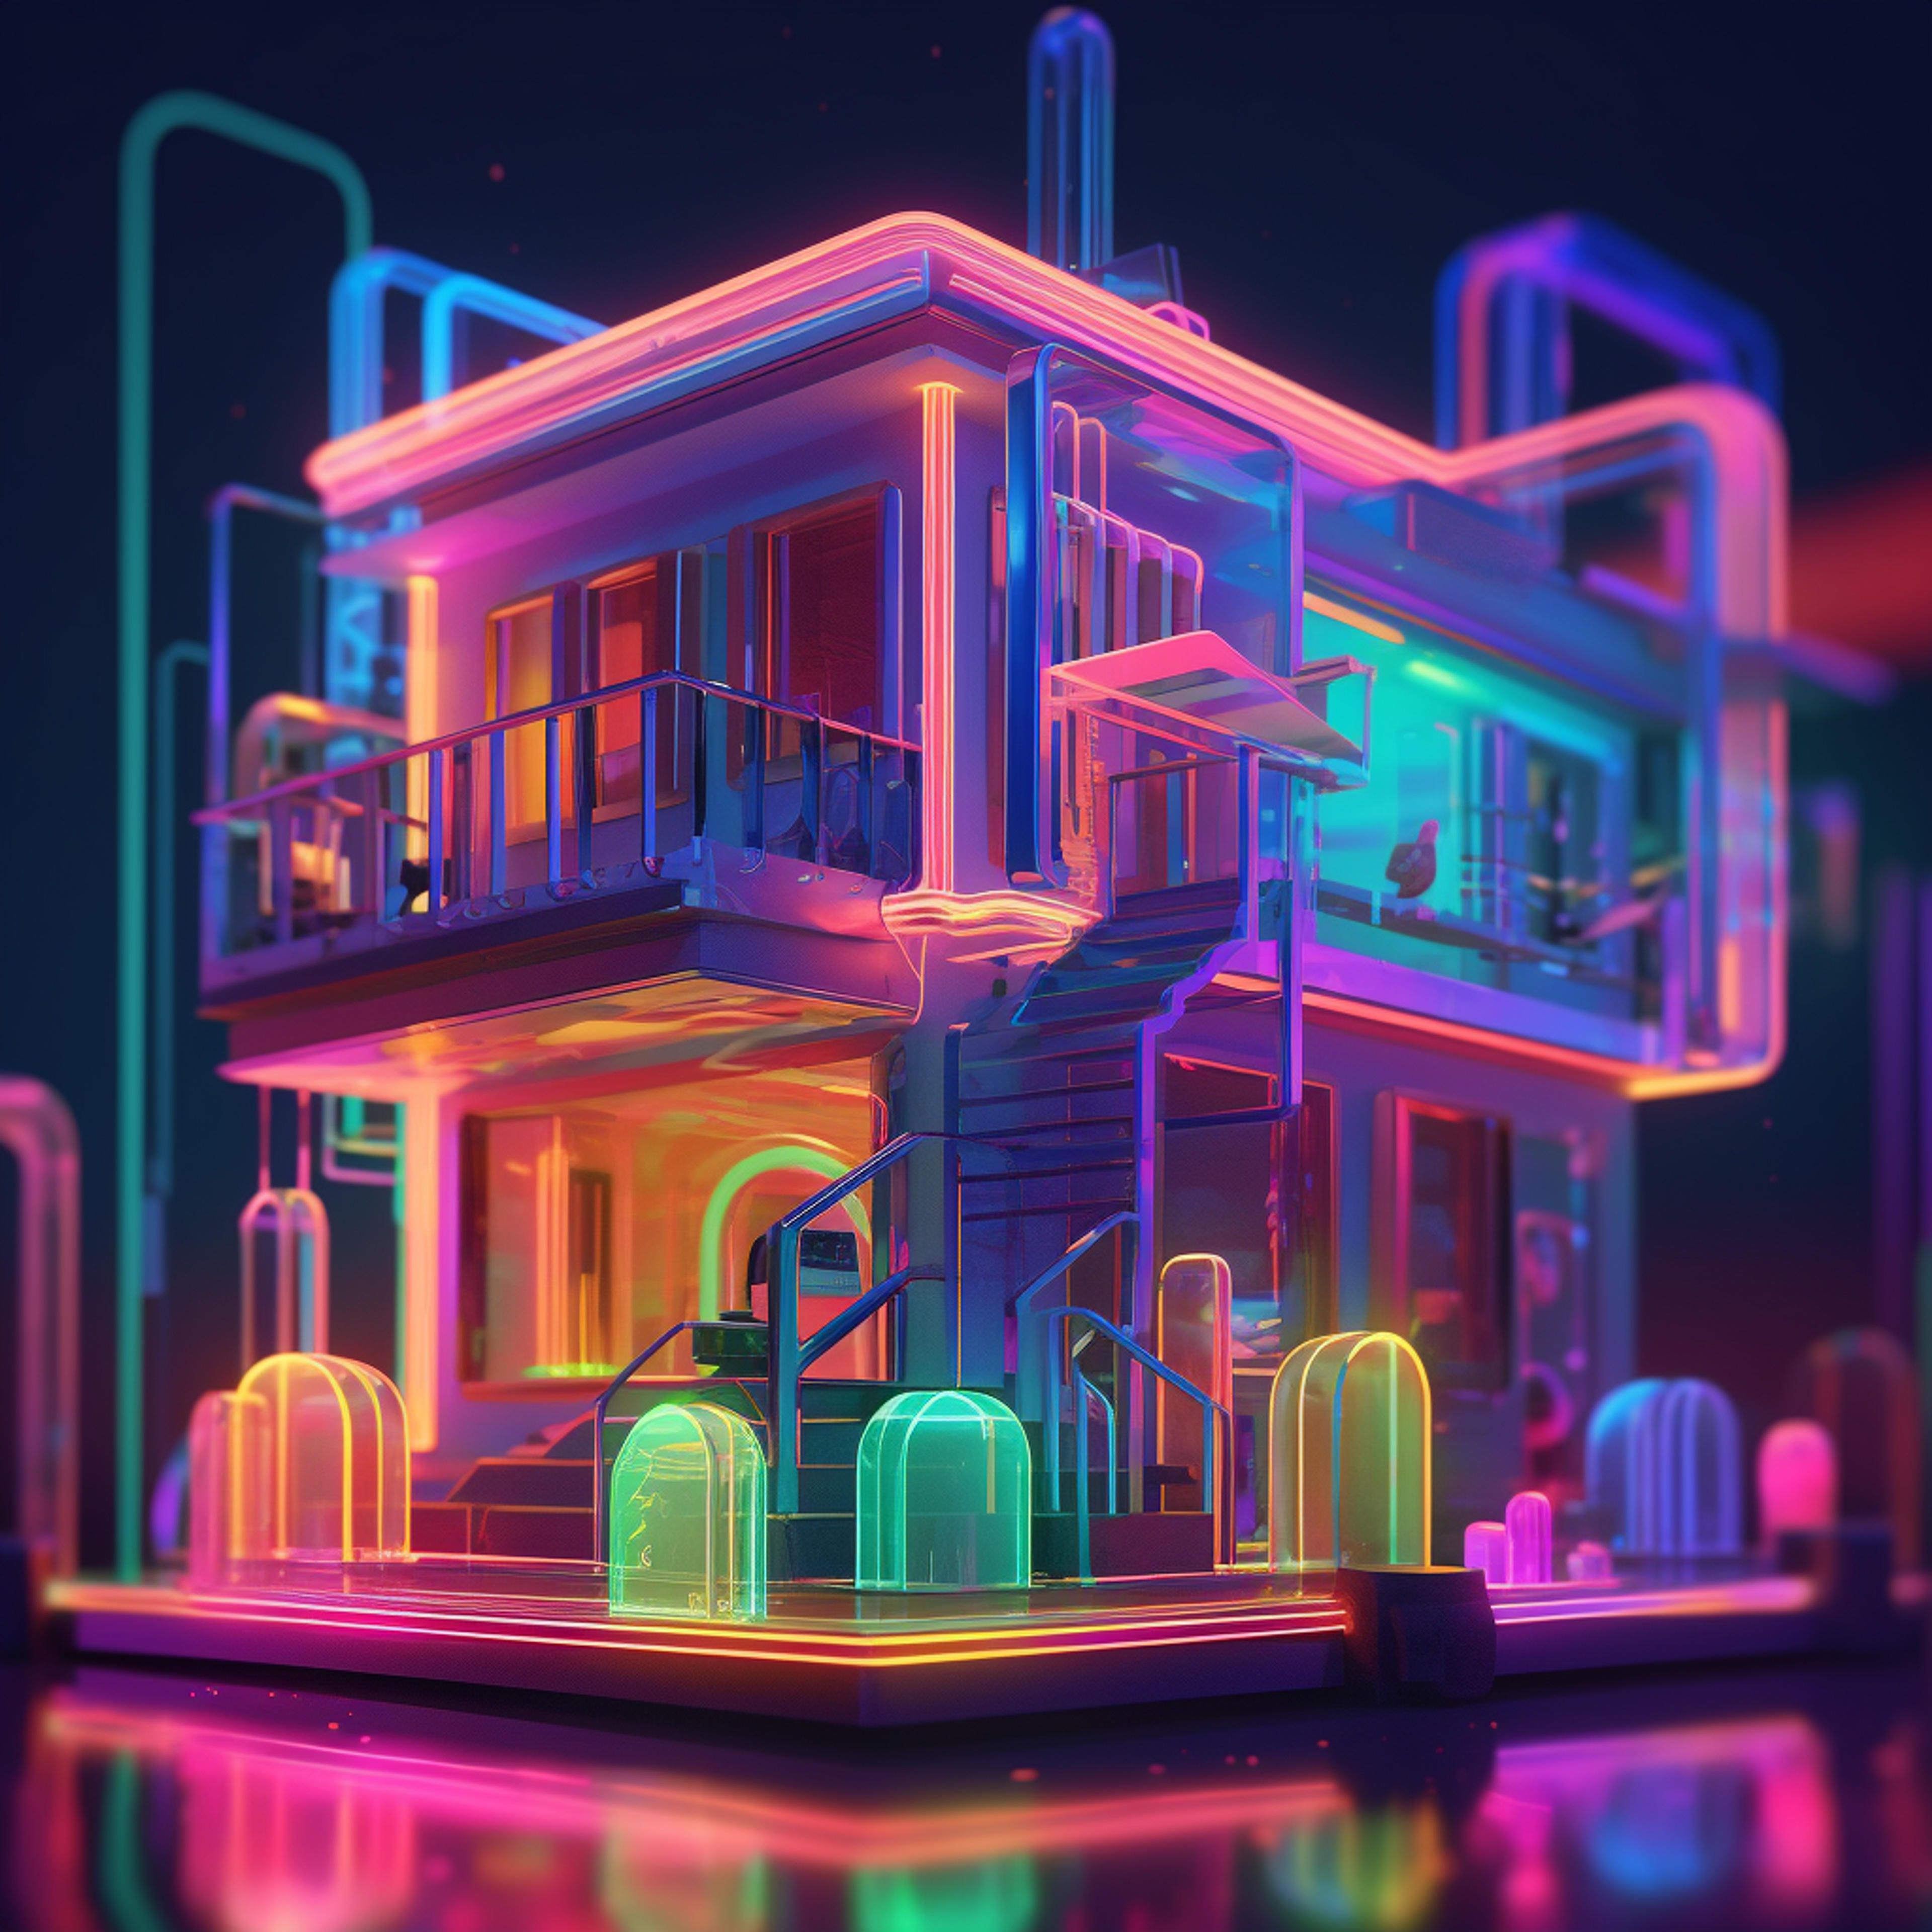 A digital art piece of a colorful, neon-lit building. - Low poly